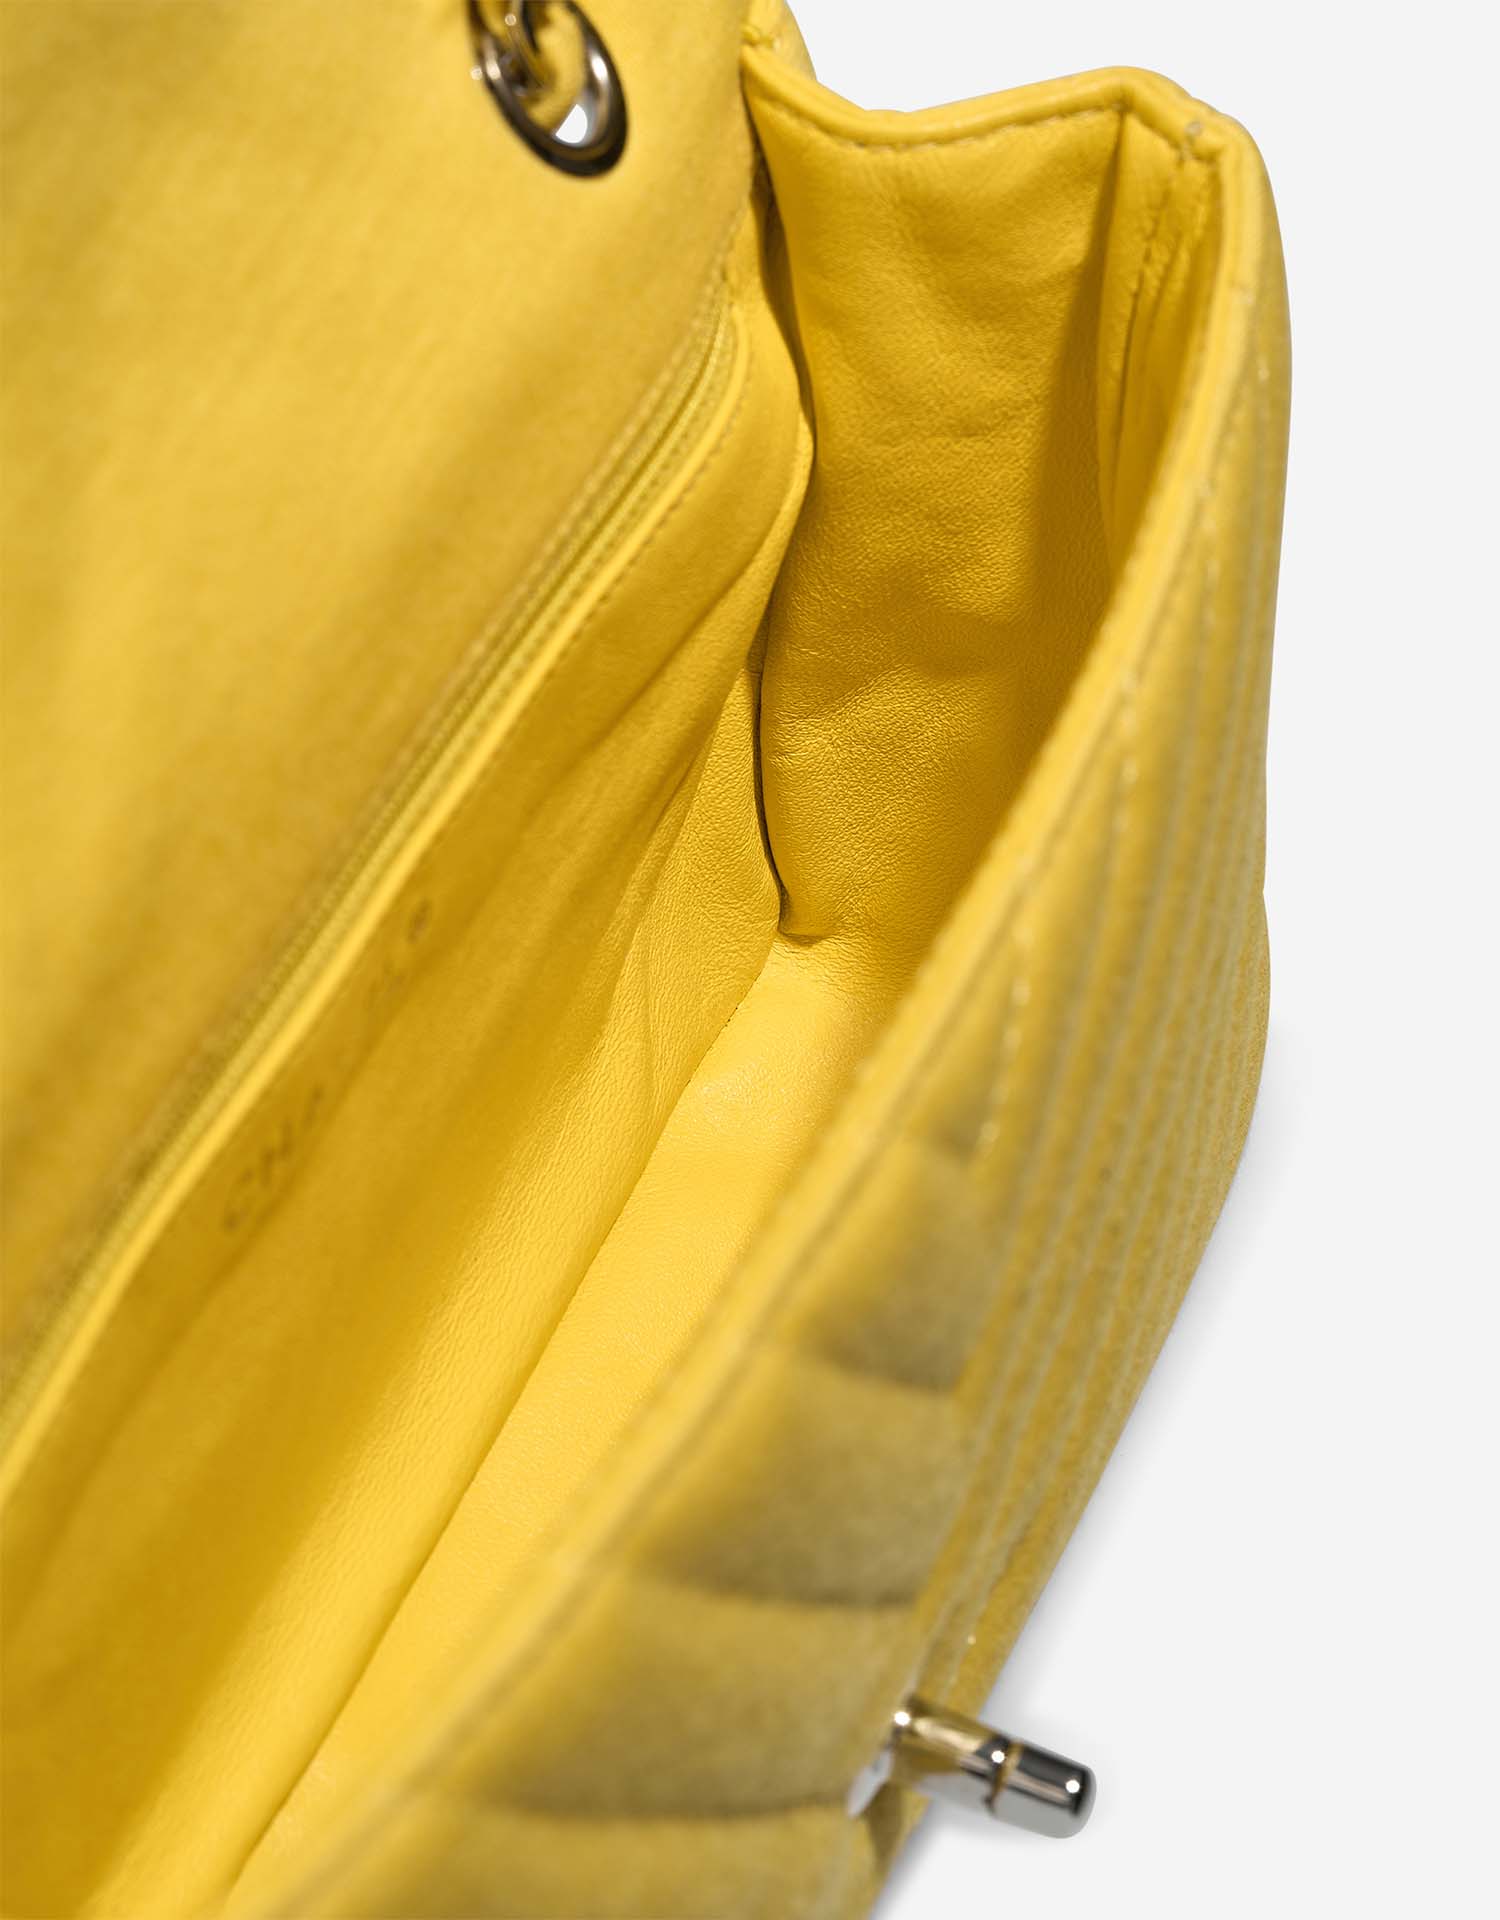 Chanel Timeless Medium Yellow Inside  | Sell your designer bag on Saclab.com